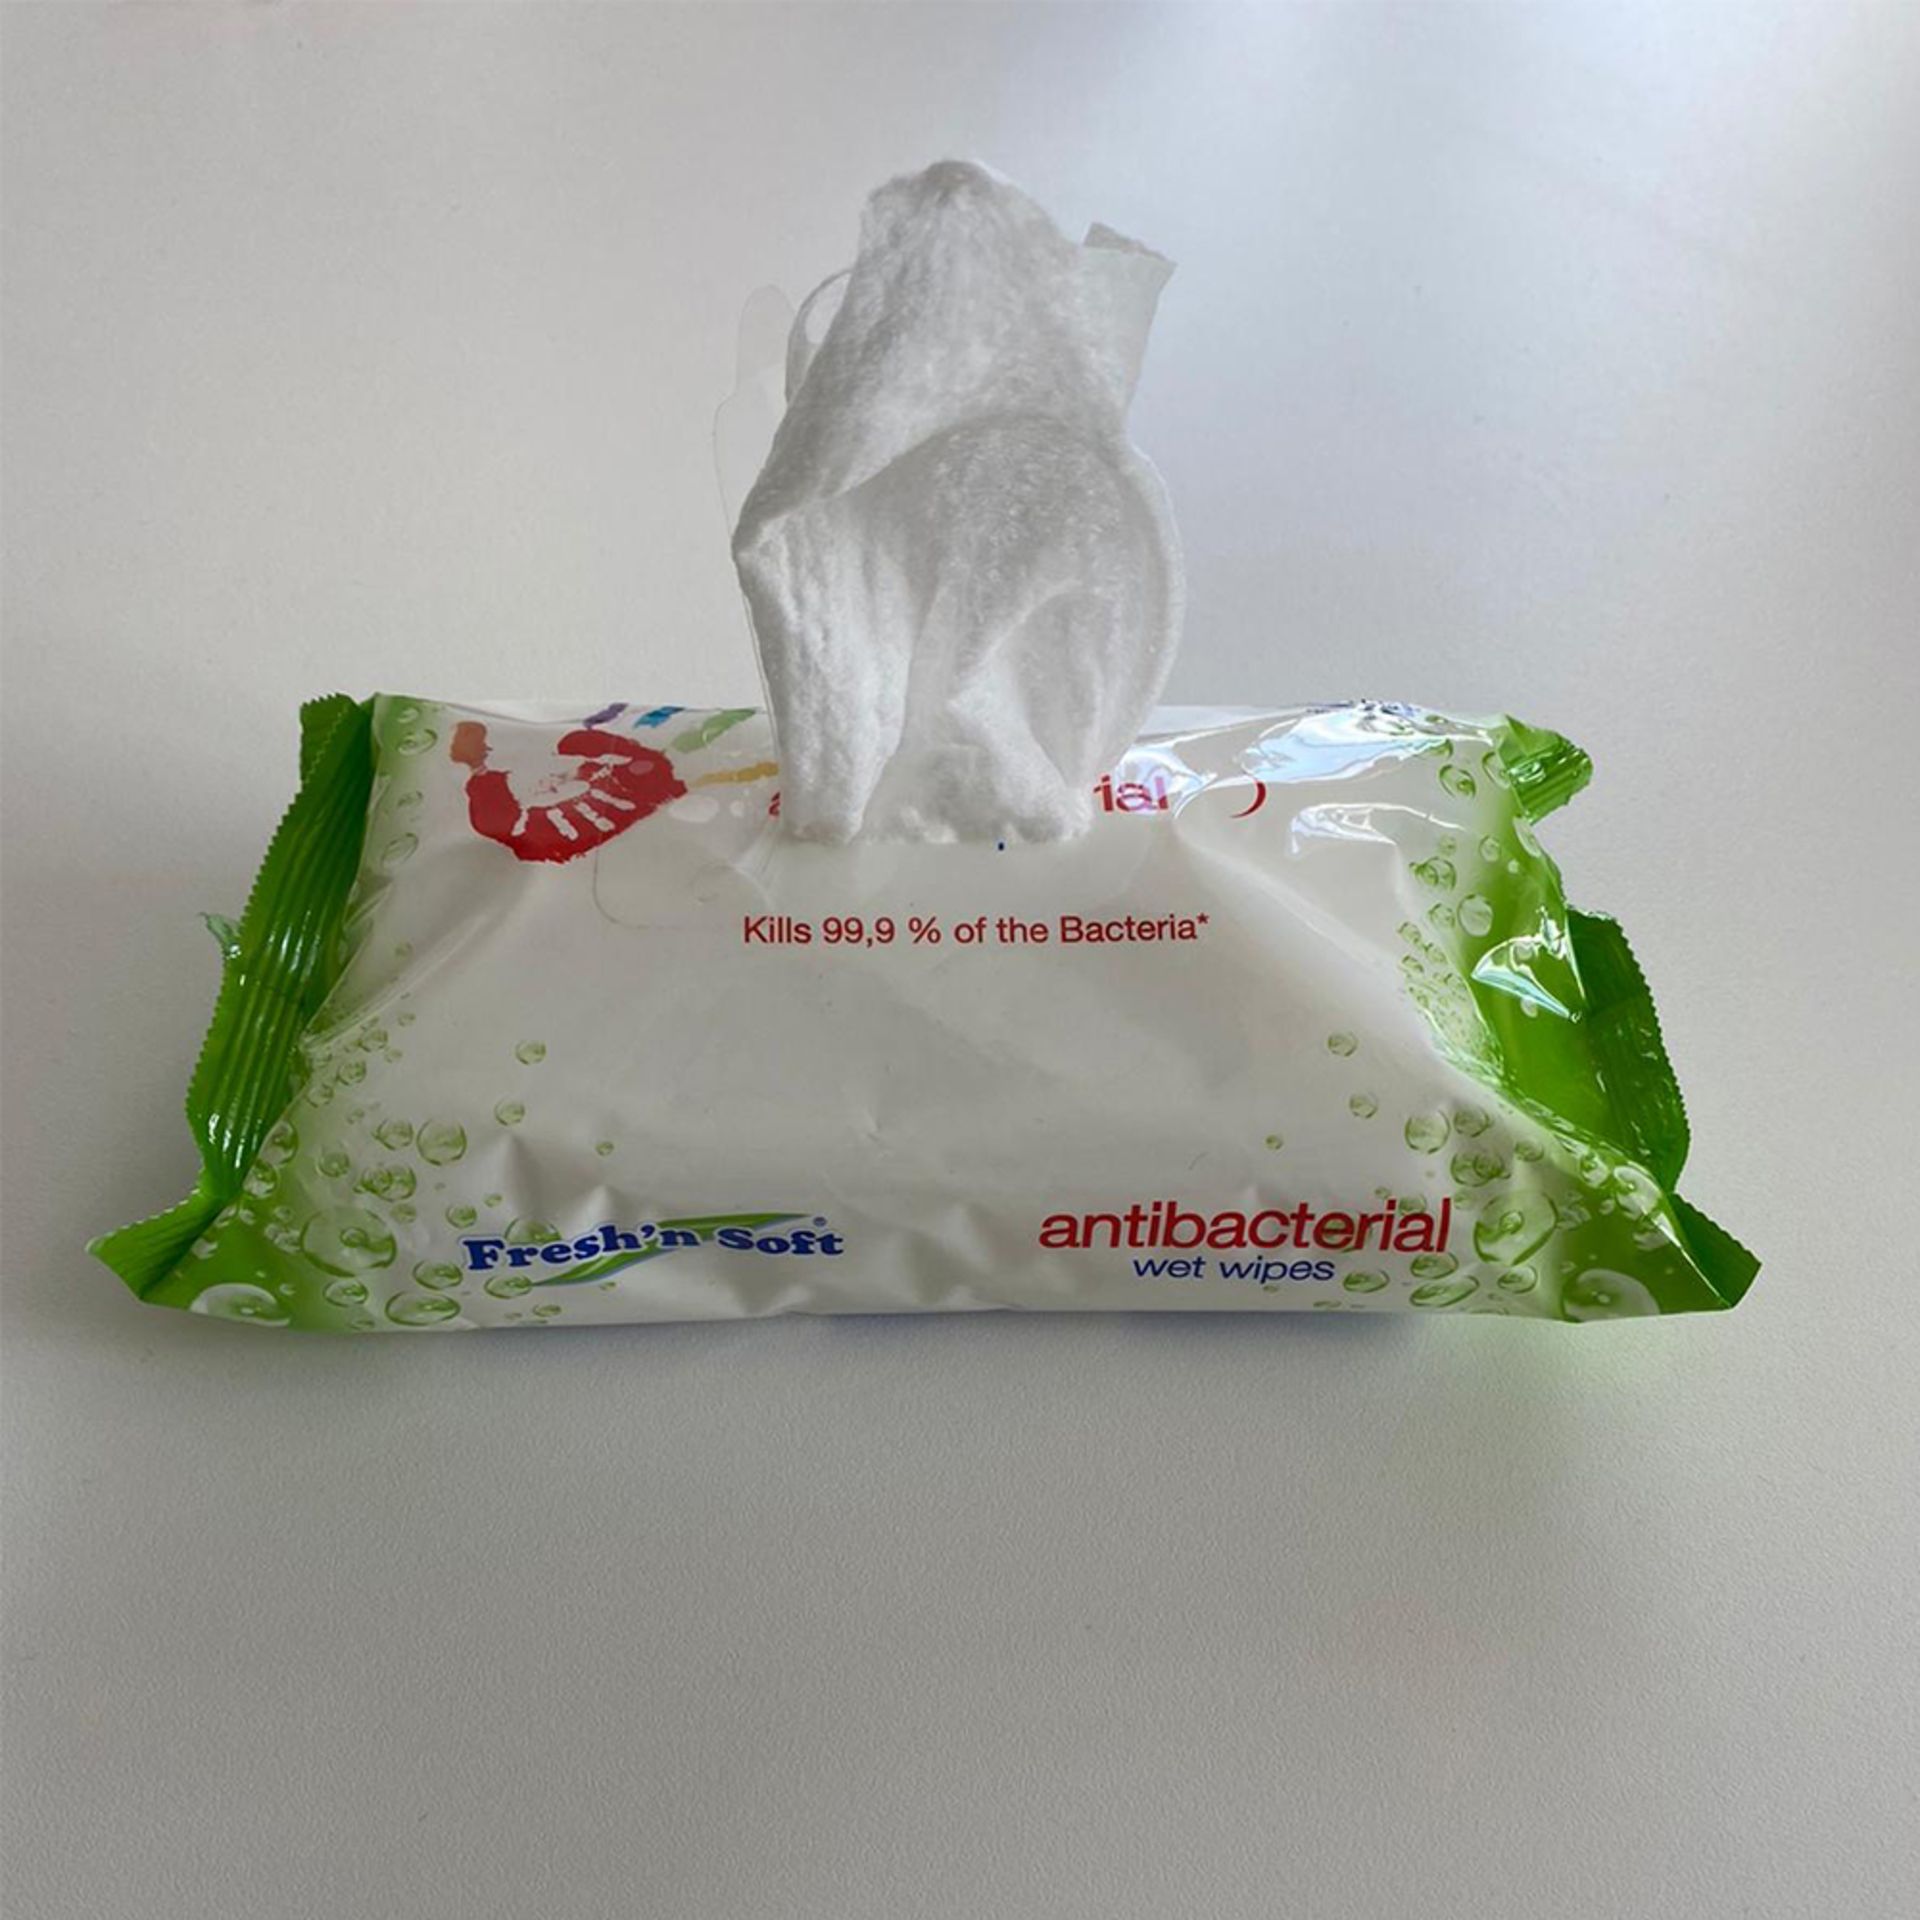 1 Pallet Of New Fresh n soft Antibacterial wipes - Image 4 of 4